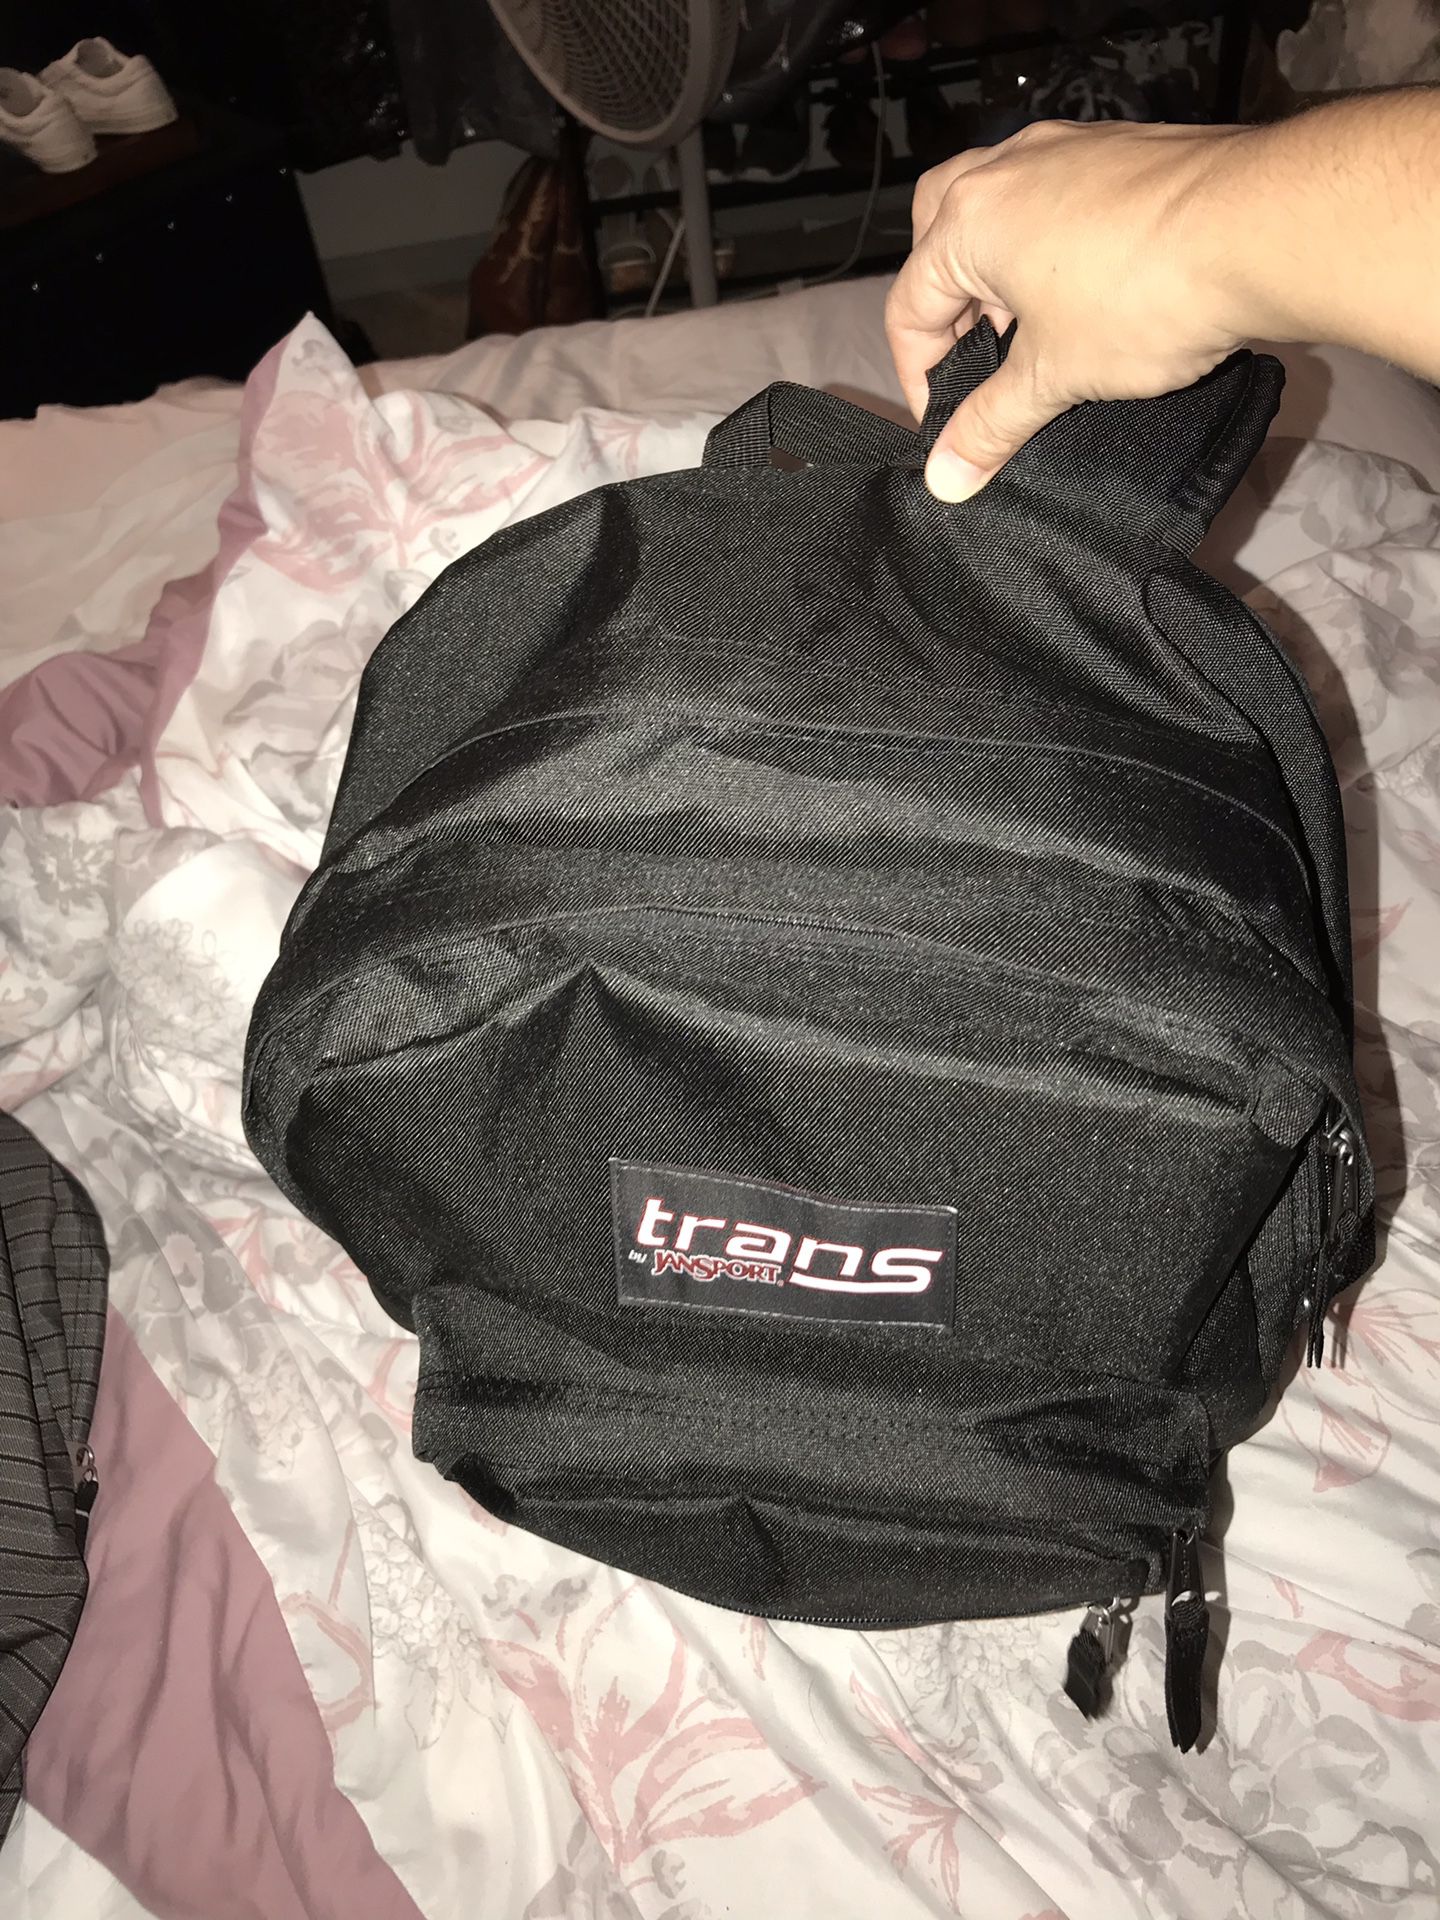 Trans sport backpack